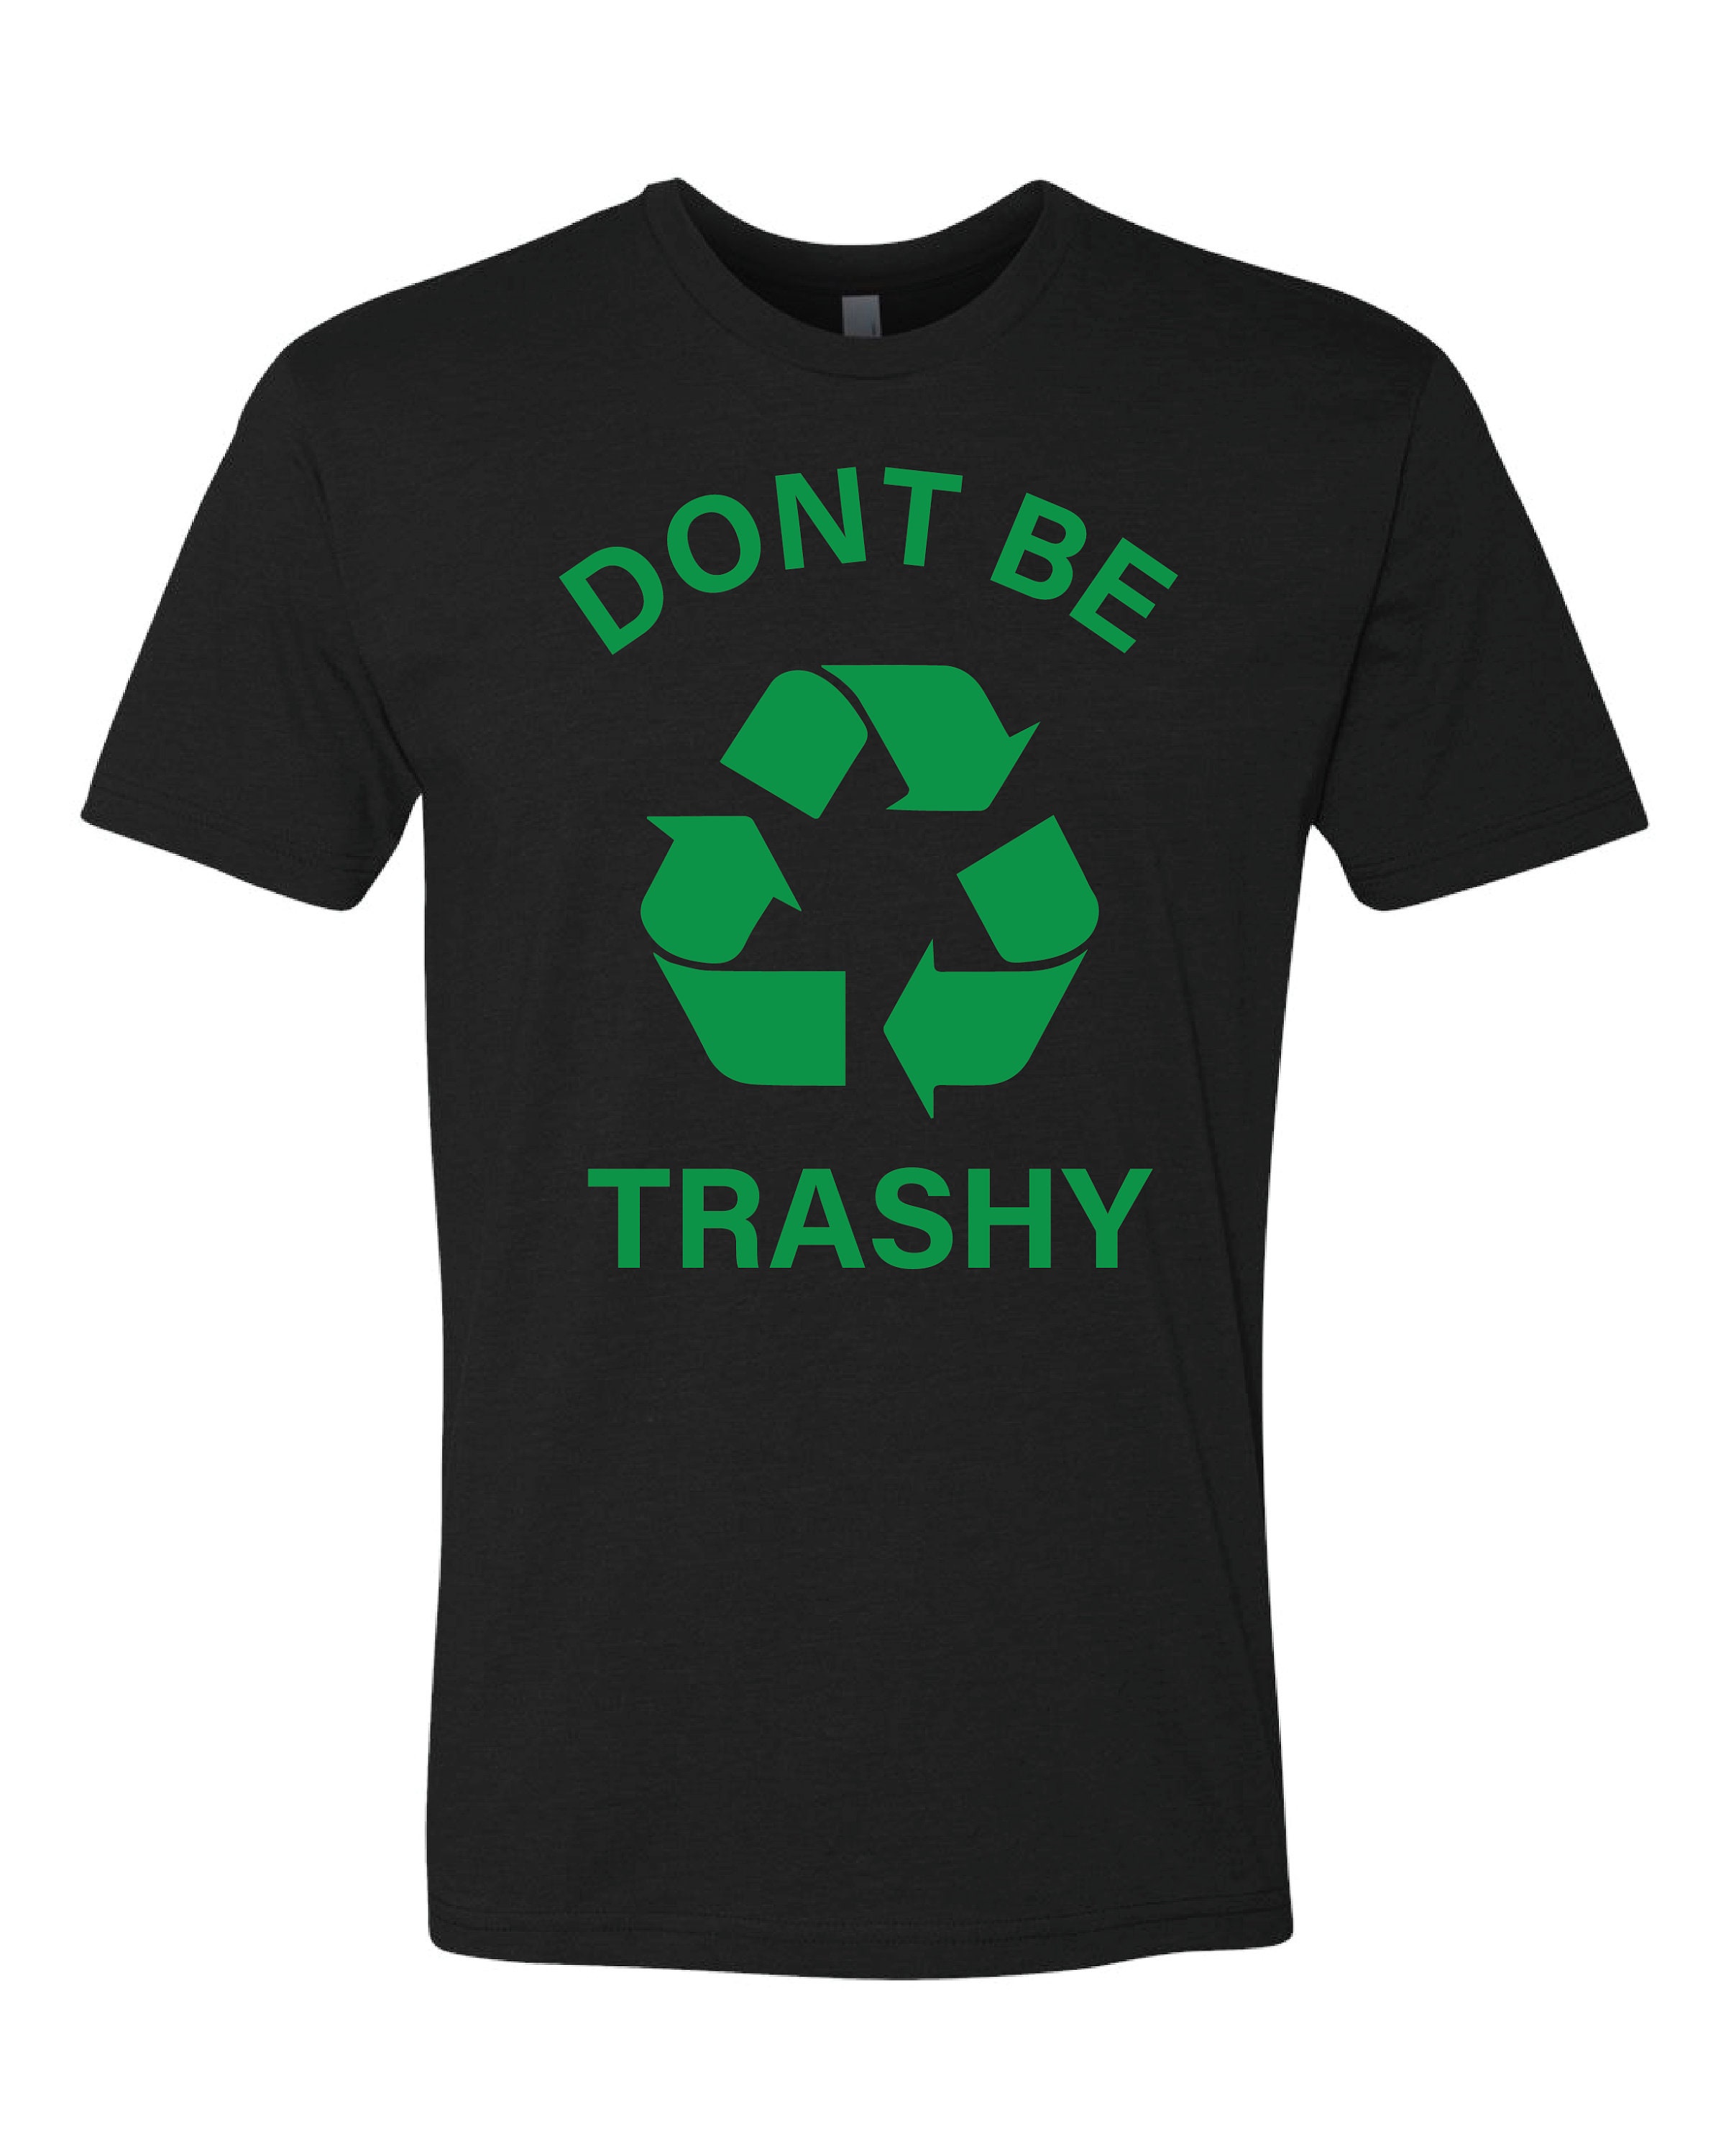 Don't Be Trashy Shirt Recycle shirt meme shirt gag | Etsy